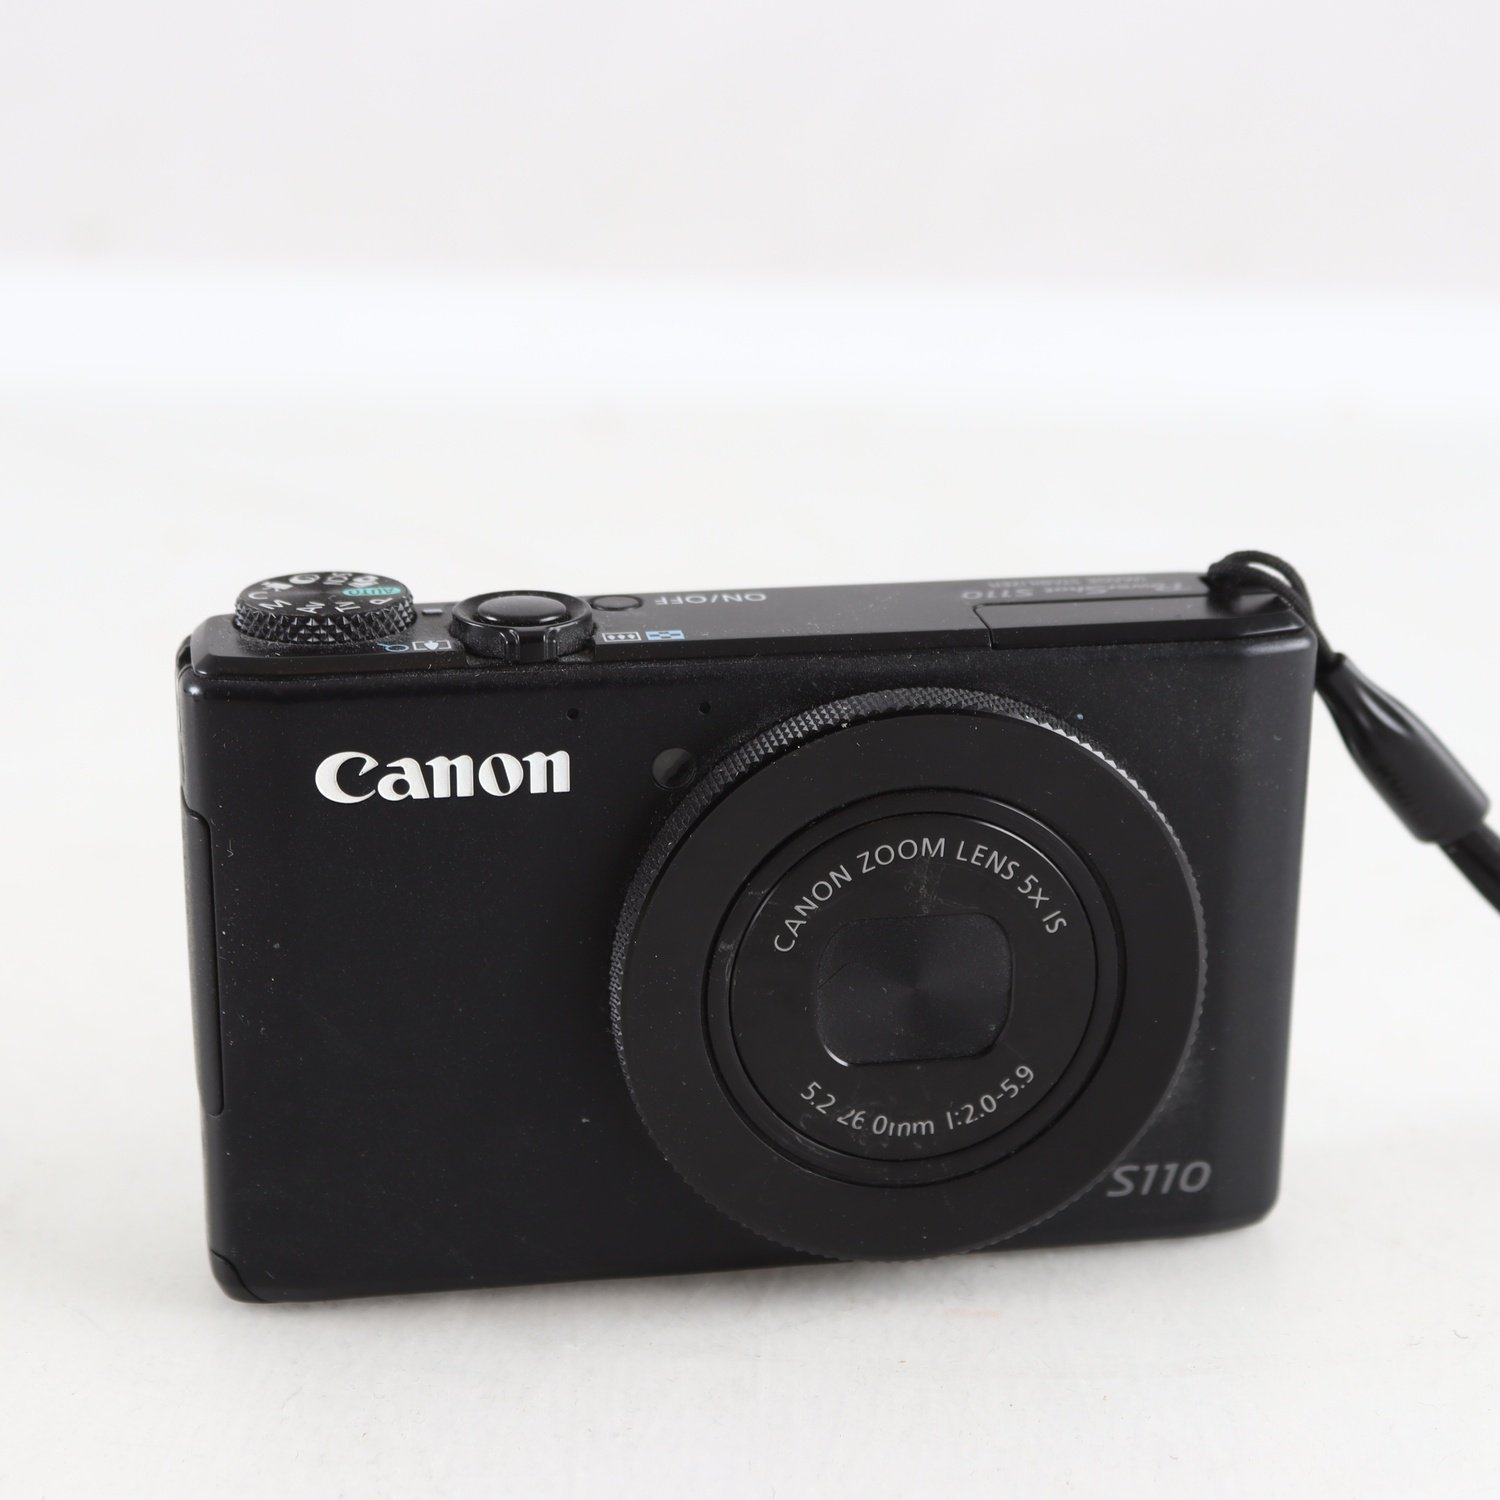 Kamera, Canon S110, powershot.